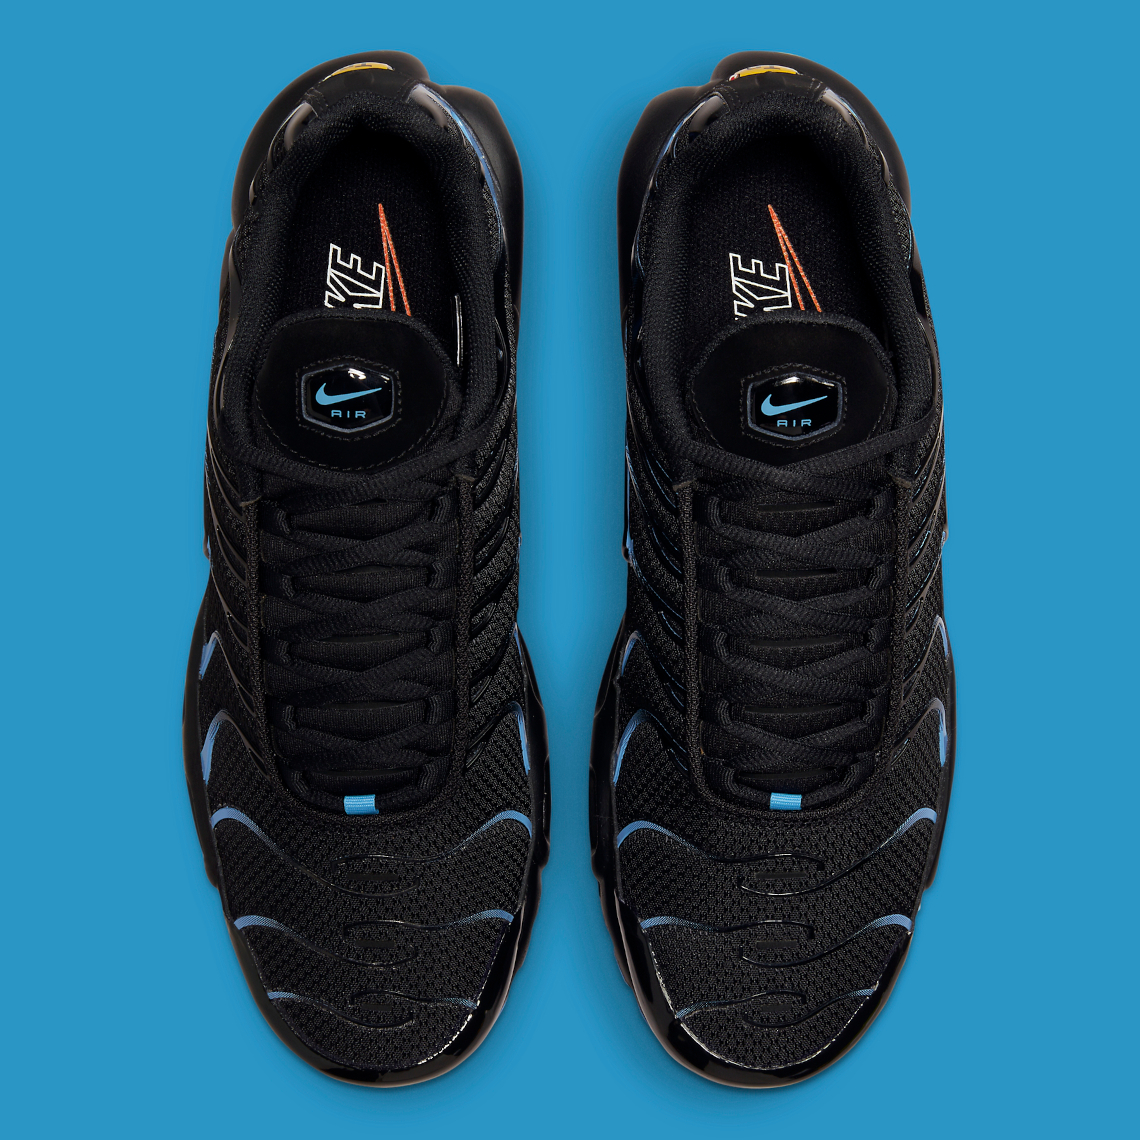 Nike Air Max Plus OG “Hyper Blue”